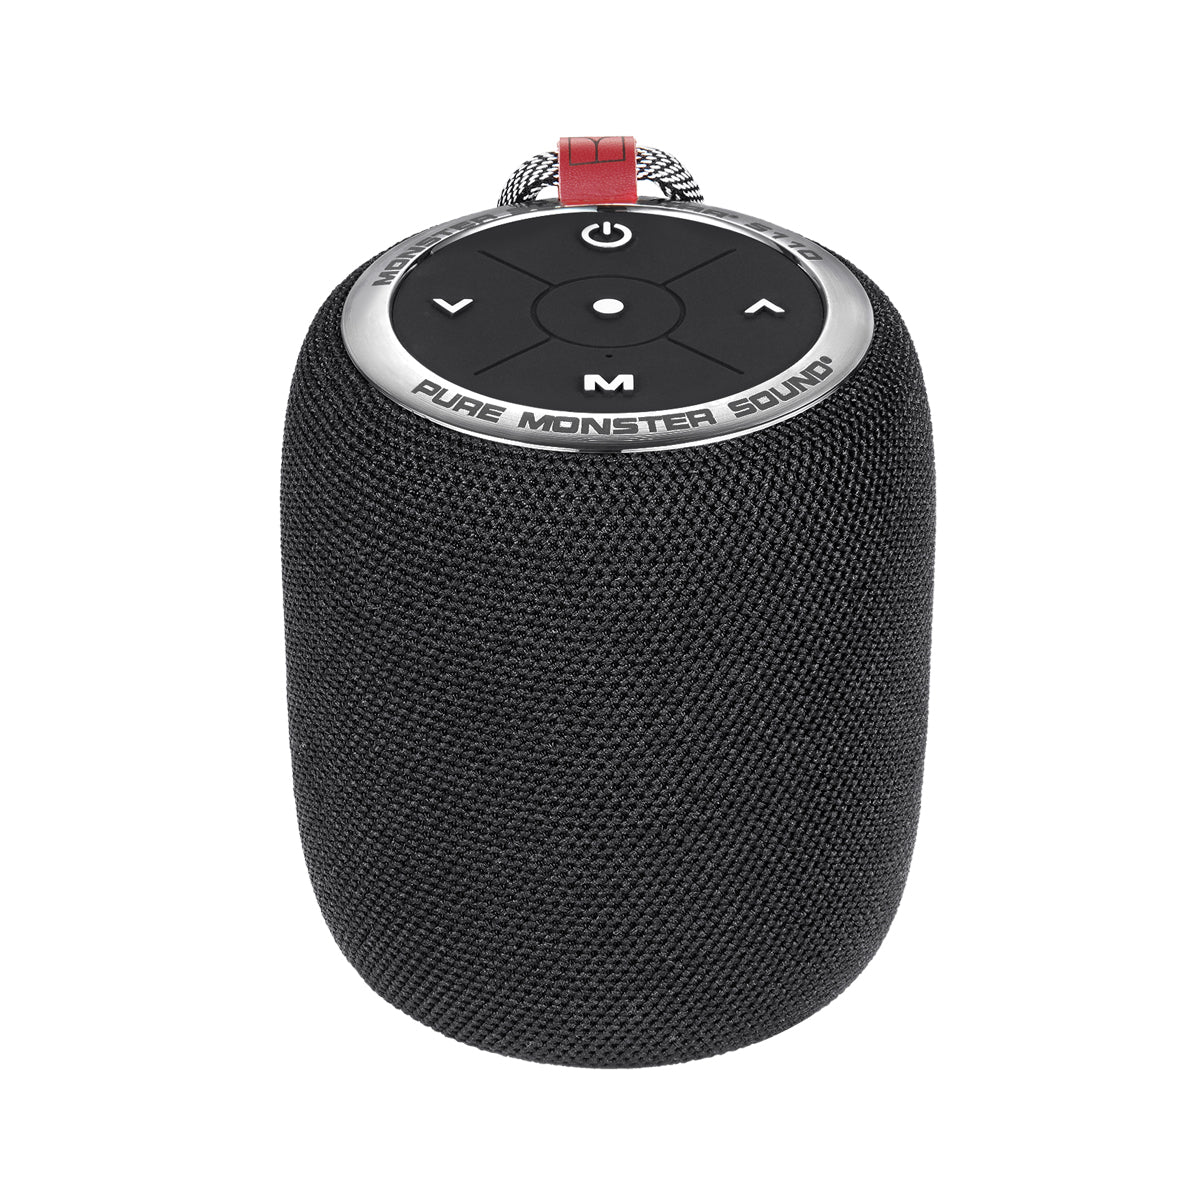 MONSTER S110 Superstar Portable Bluetooth Speaker